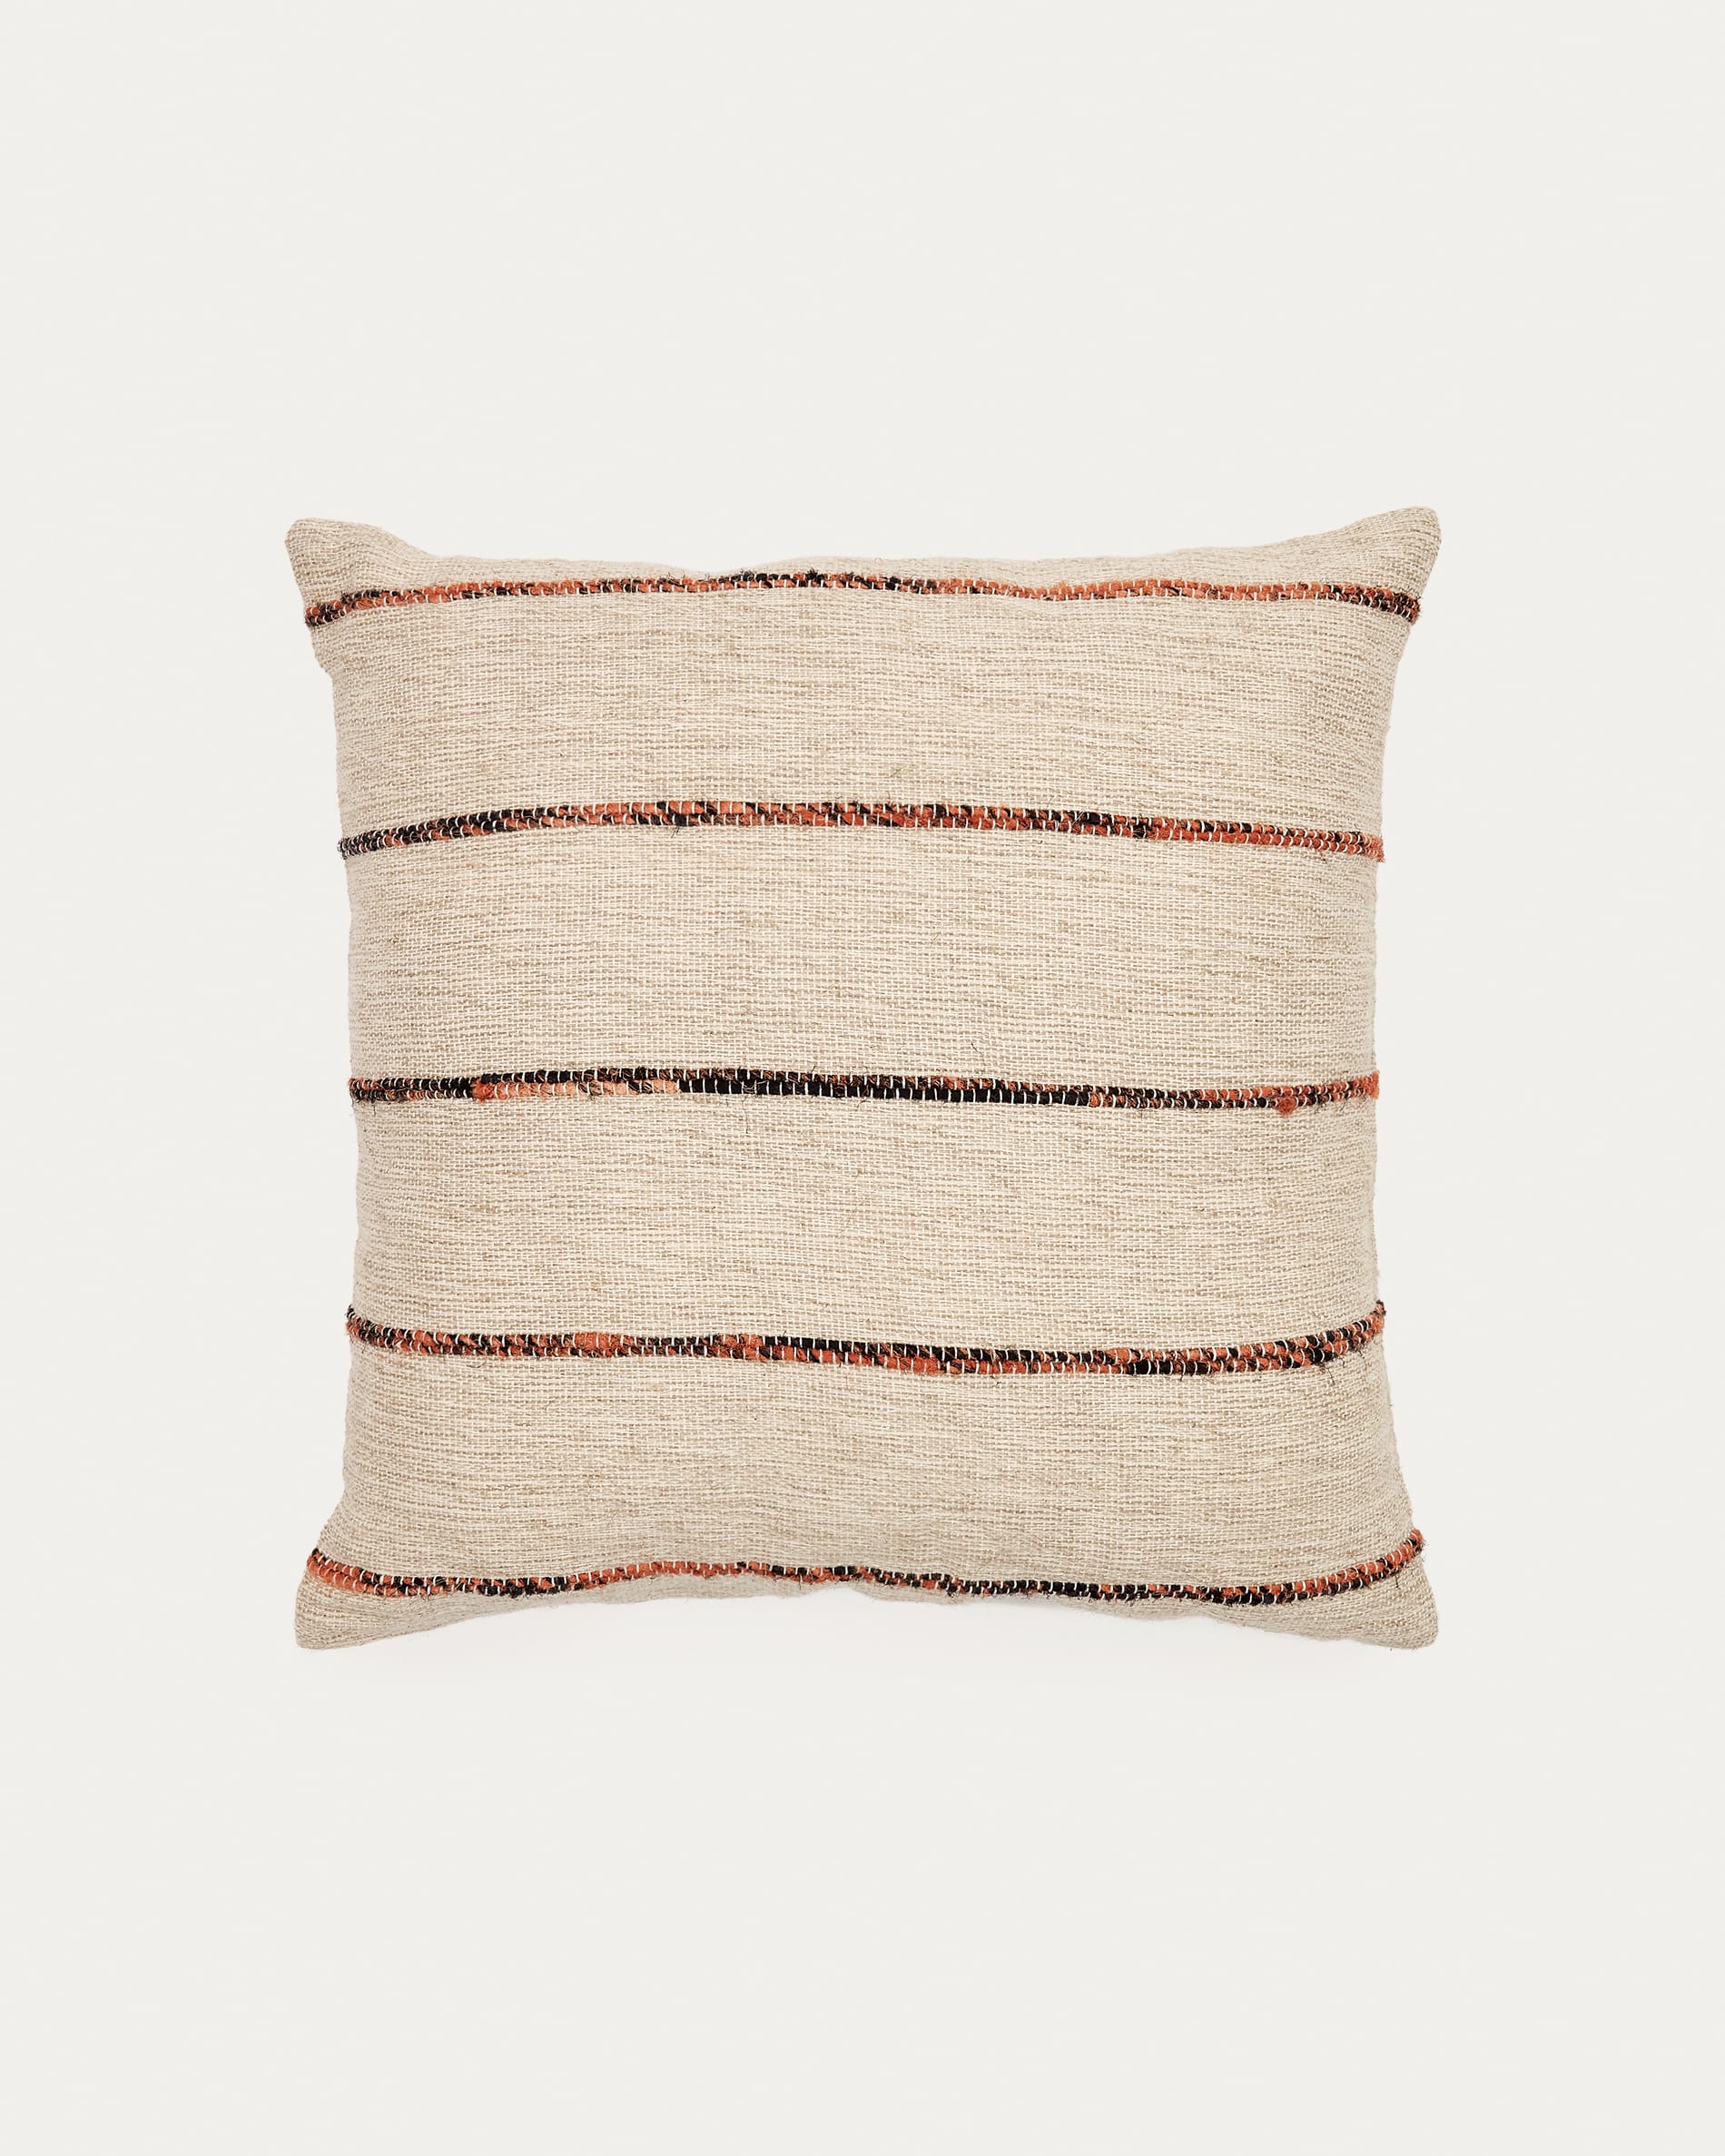 Sueli linen and natural cotton cushion cover 45 x 45 cm